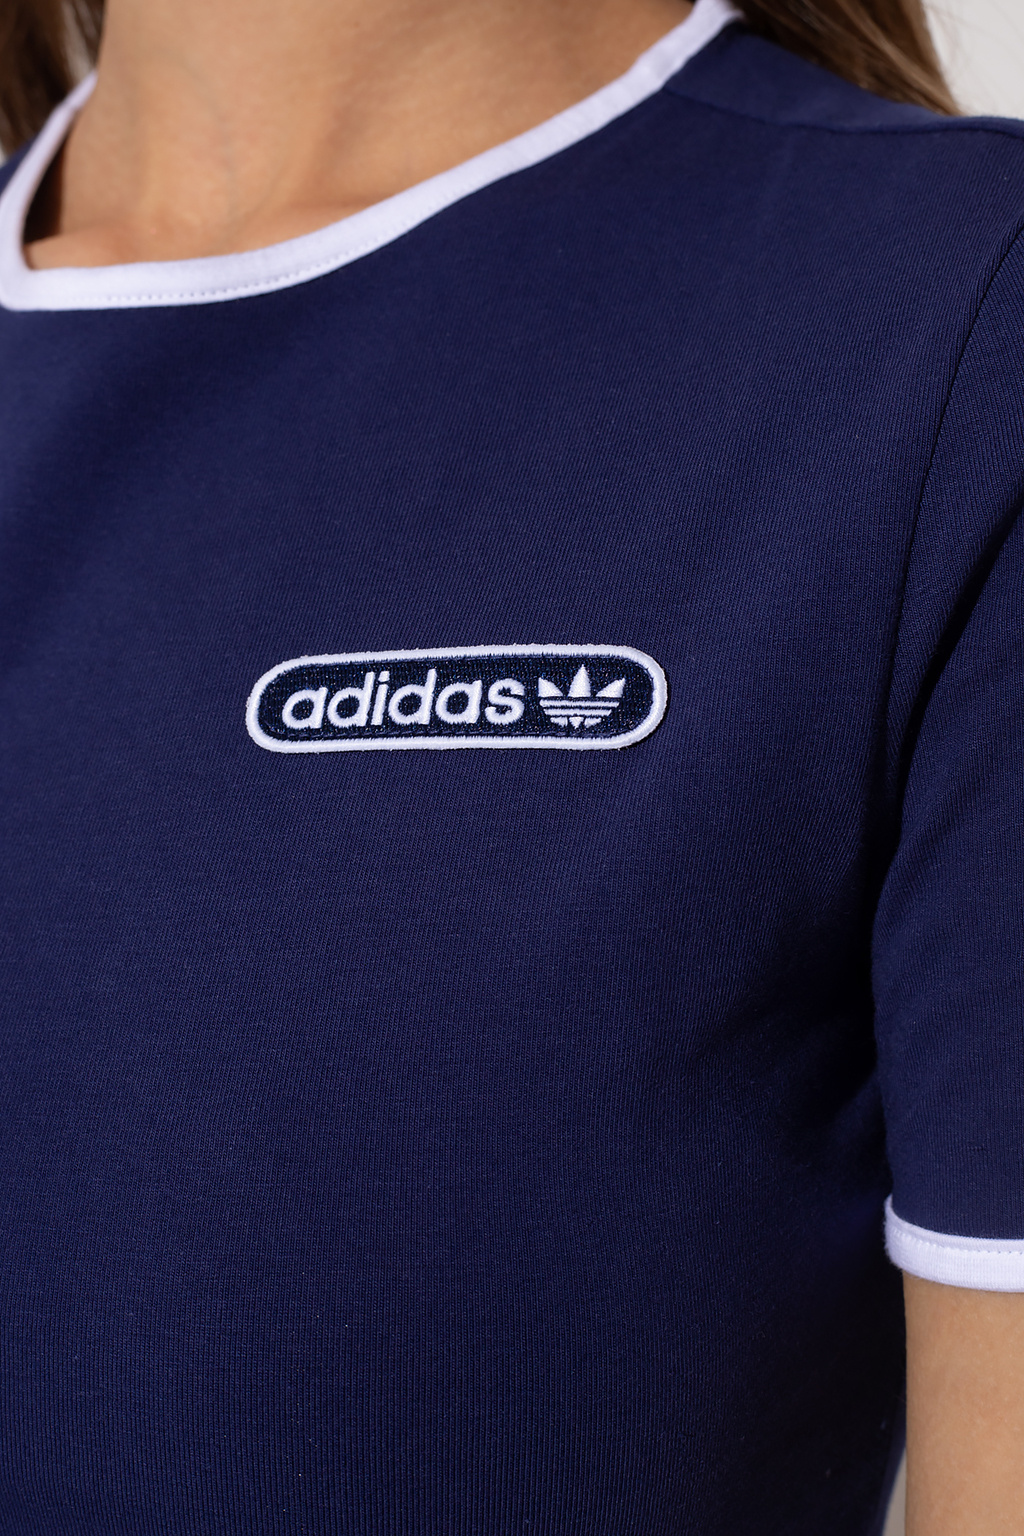 Navy blue Logo T - adidas - ADIDAS Originals 3 Junior Tights Stripe - Filles Entraînement IetpShops shirt Australia